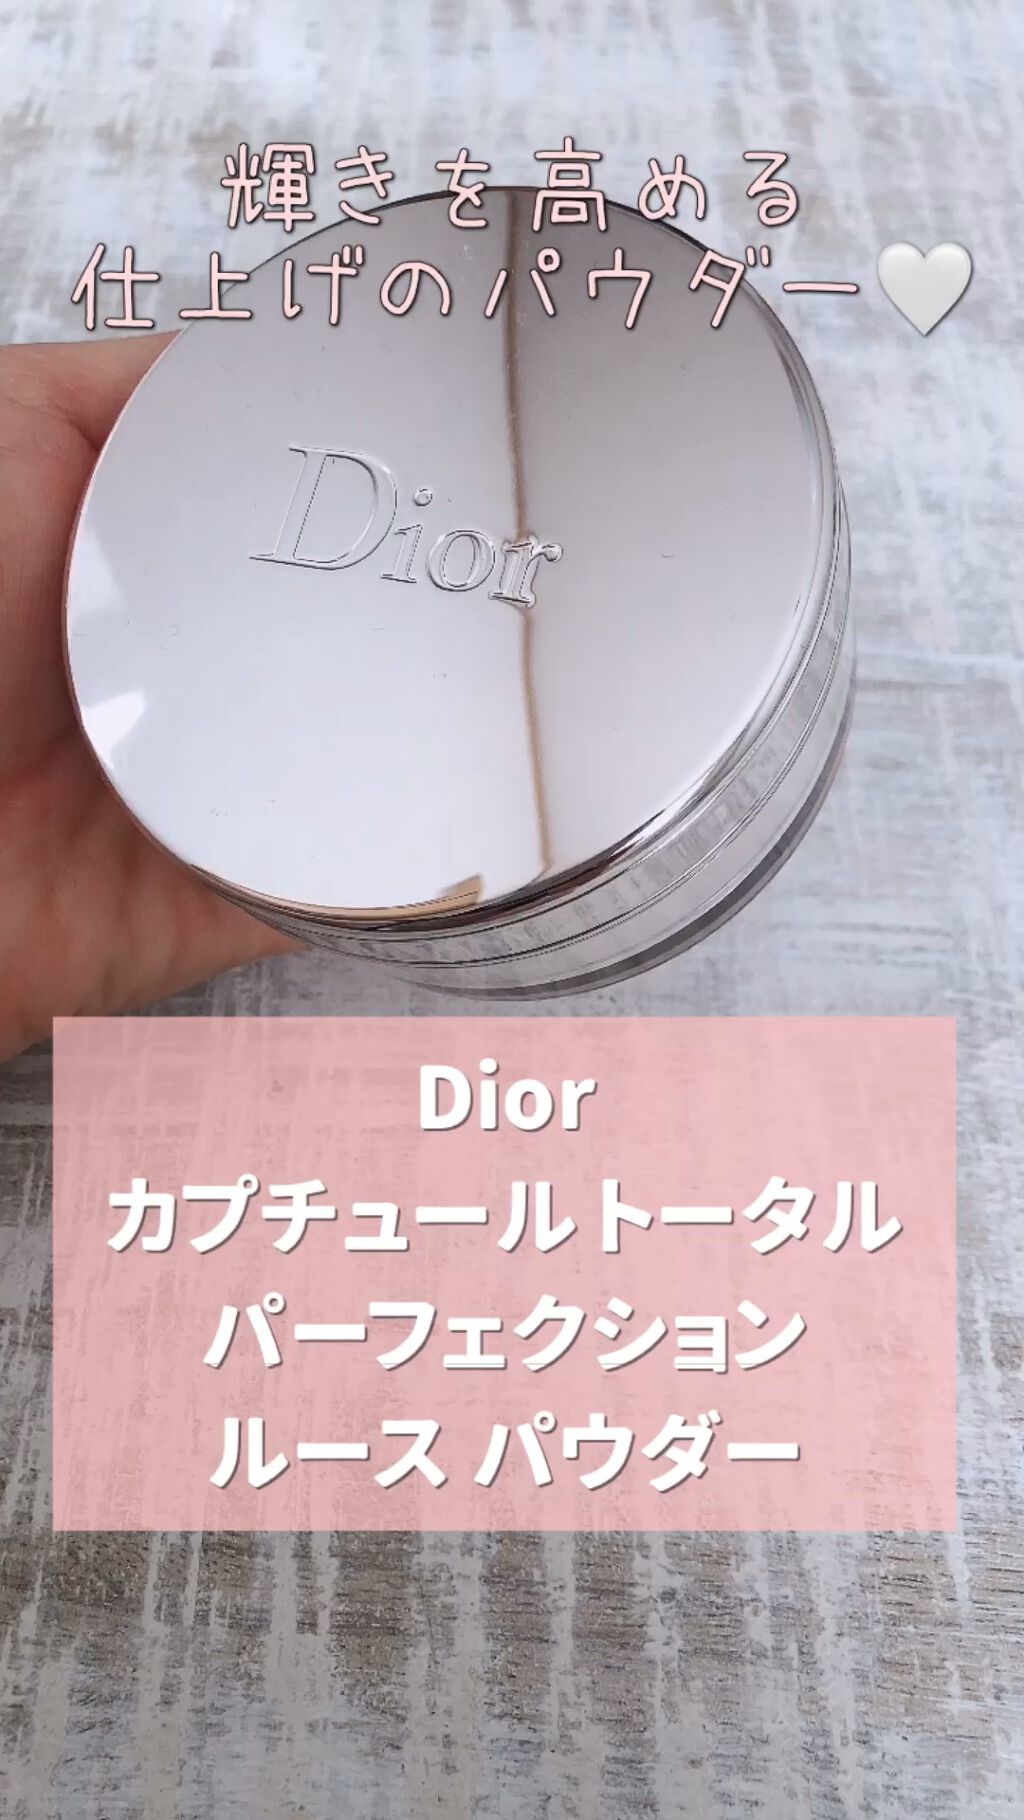 Dior カプチュール トータル パーフェクション ルース パウダー-